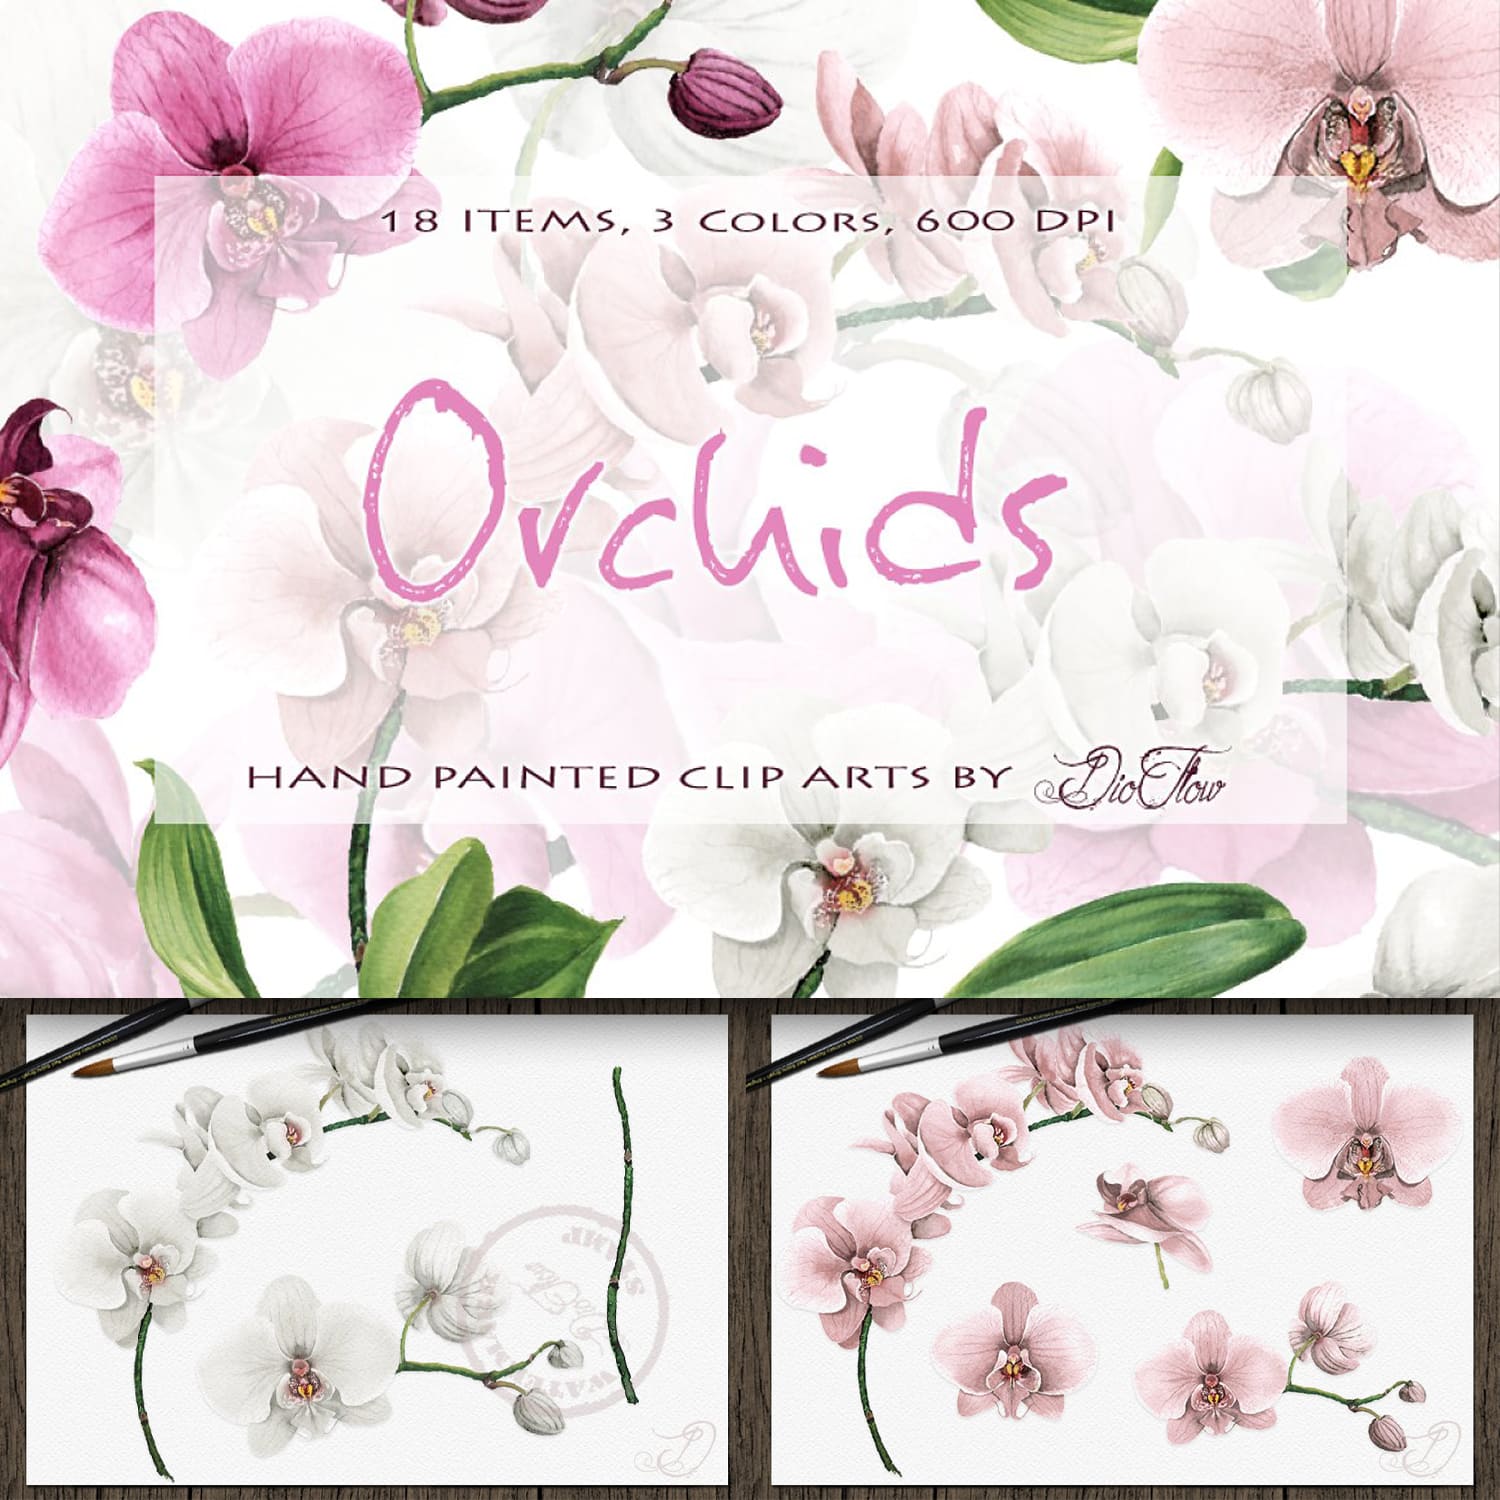 Orchid Watercolor Clip Art cover.